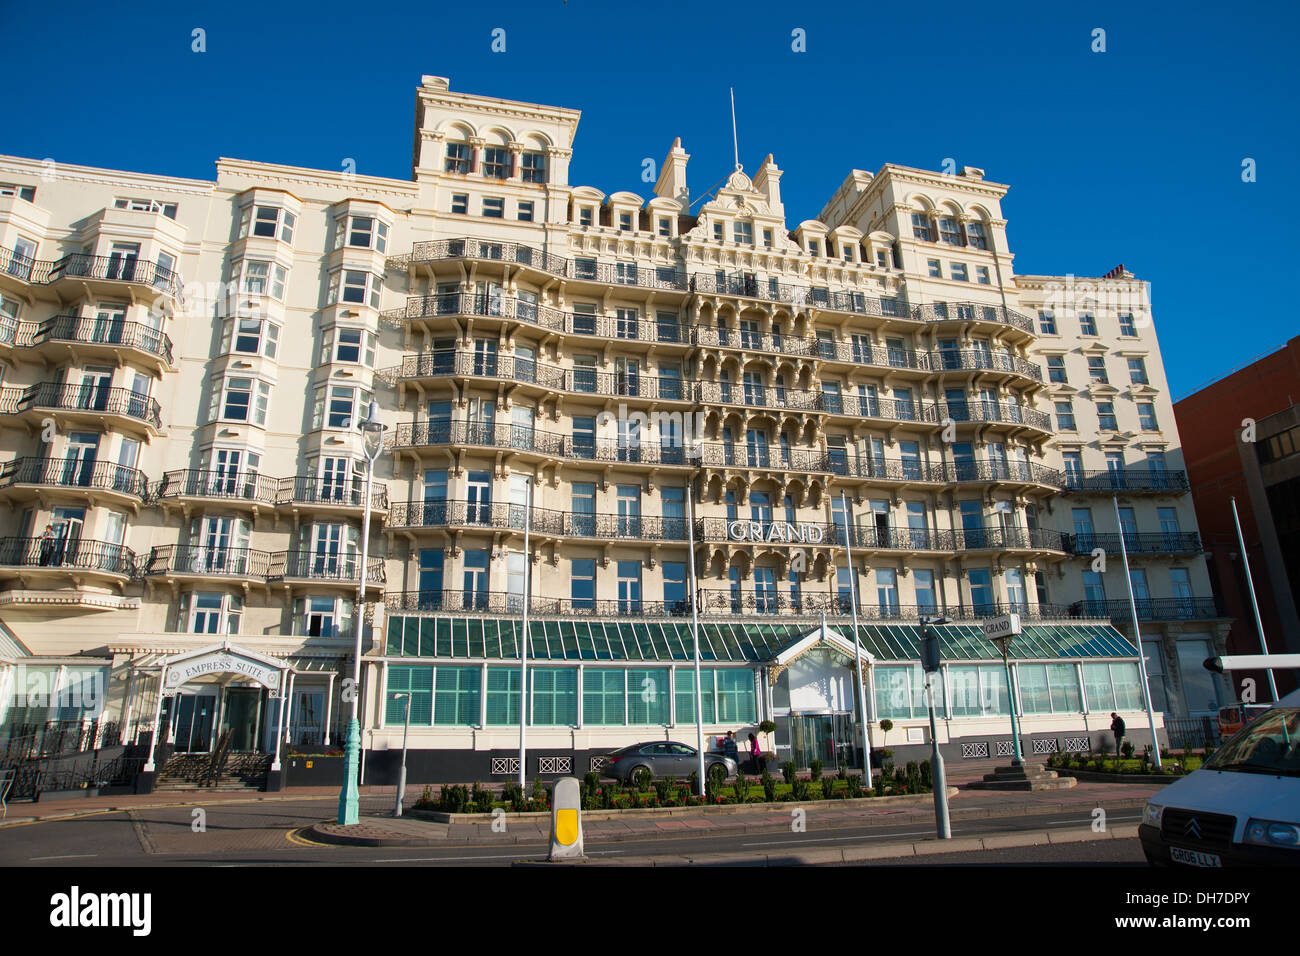 Grand Hotel exterior Brighton seafront UK Stock Photo